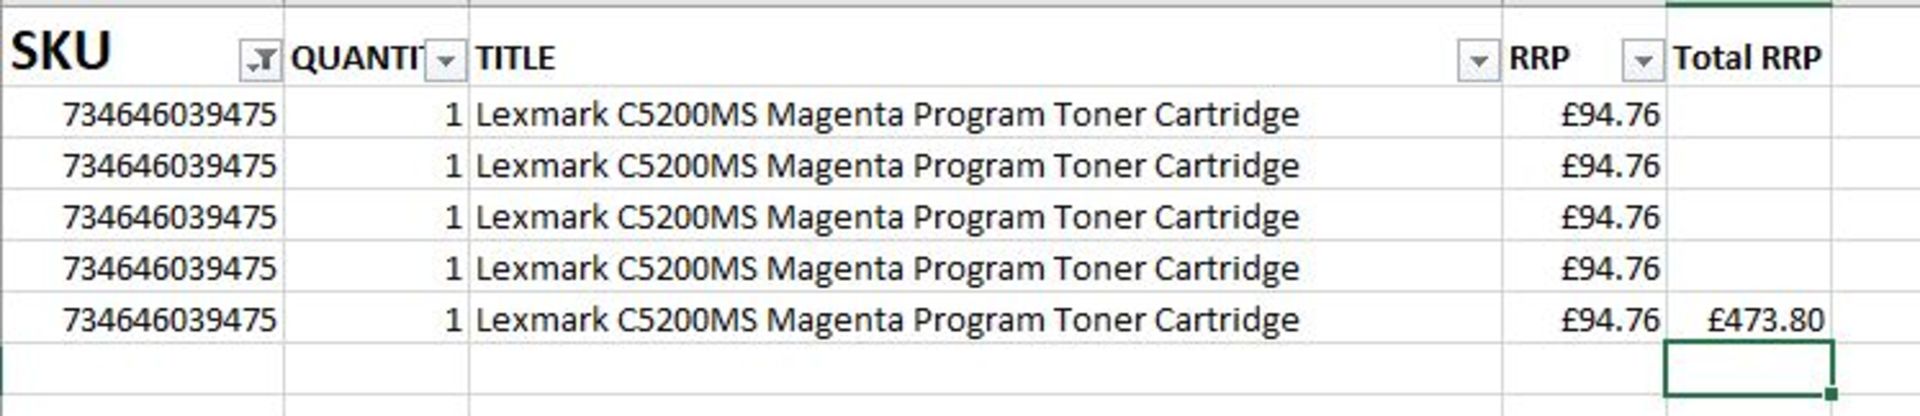 New & Sealed Packaging – Lexmark Magenta Program Toner - 5 Items - RRP £473.80 - Image 2 of 2